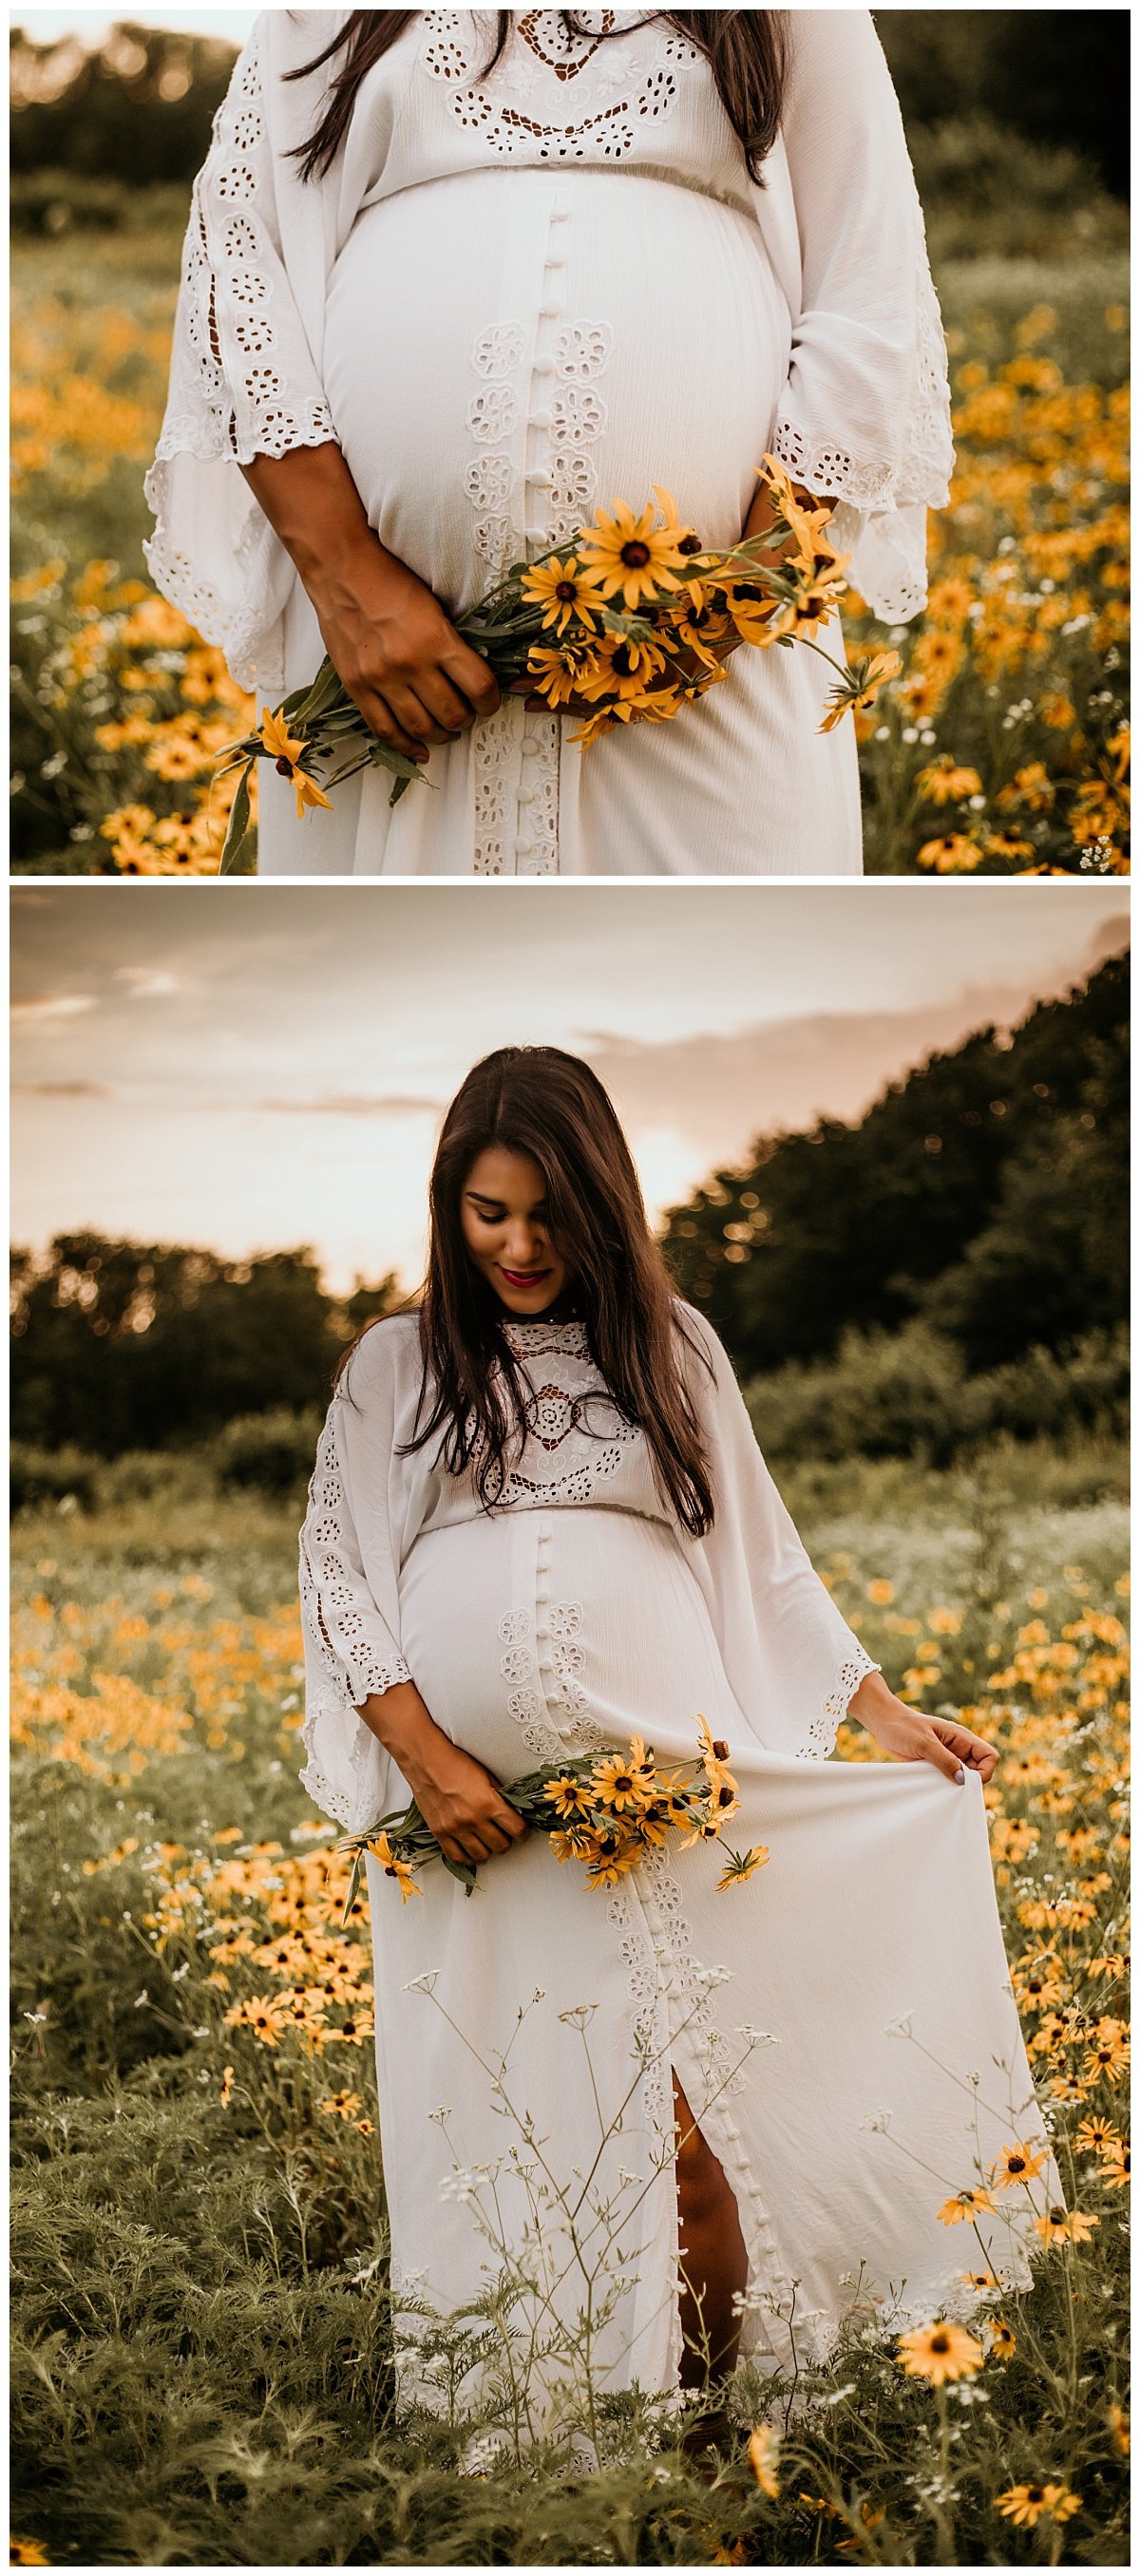 Boho+Maternity+_+Kansas+City+Maternity+Photography+_+Fillyboo+_+Summer+Maternity+Photos+_+Wildflower+Photos+_+Fillyboo+Maternity (20).jpeg